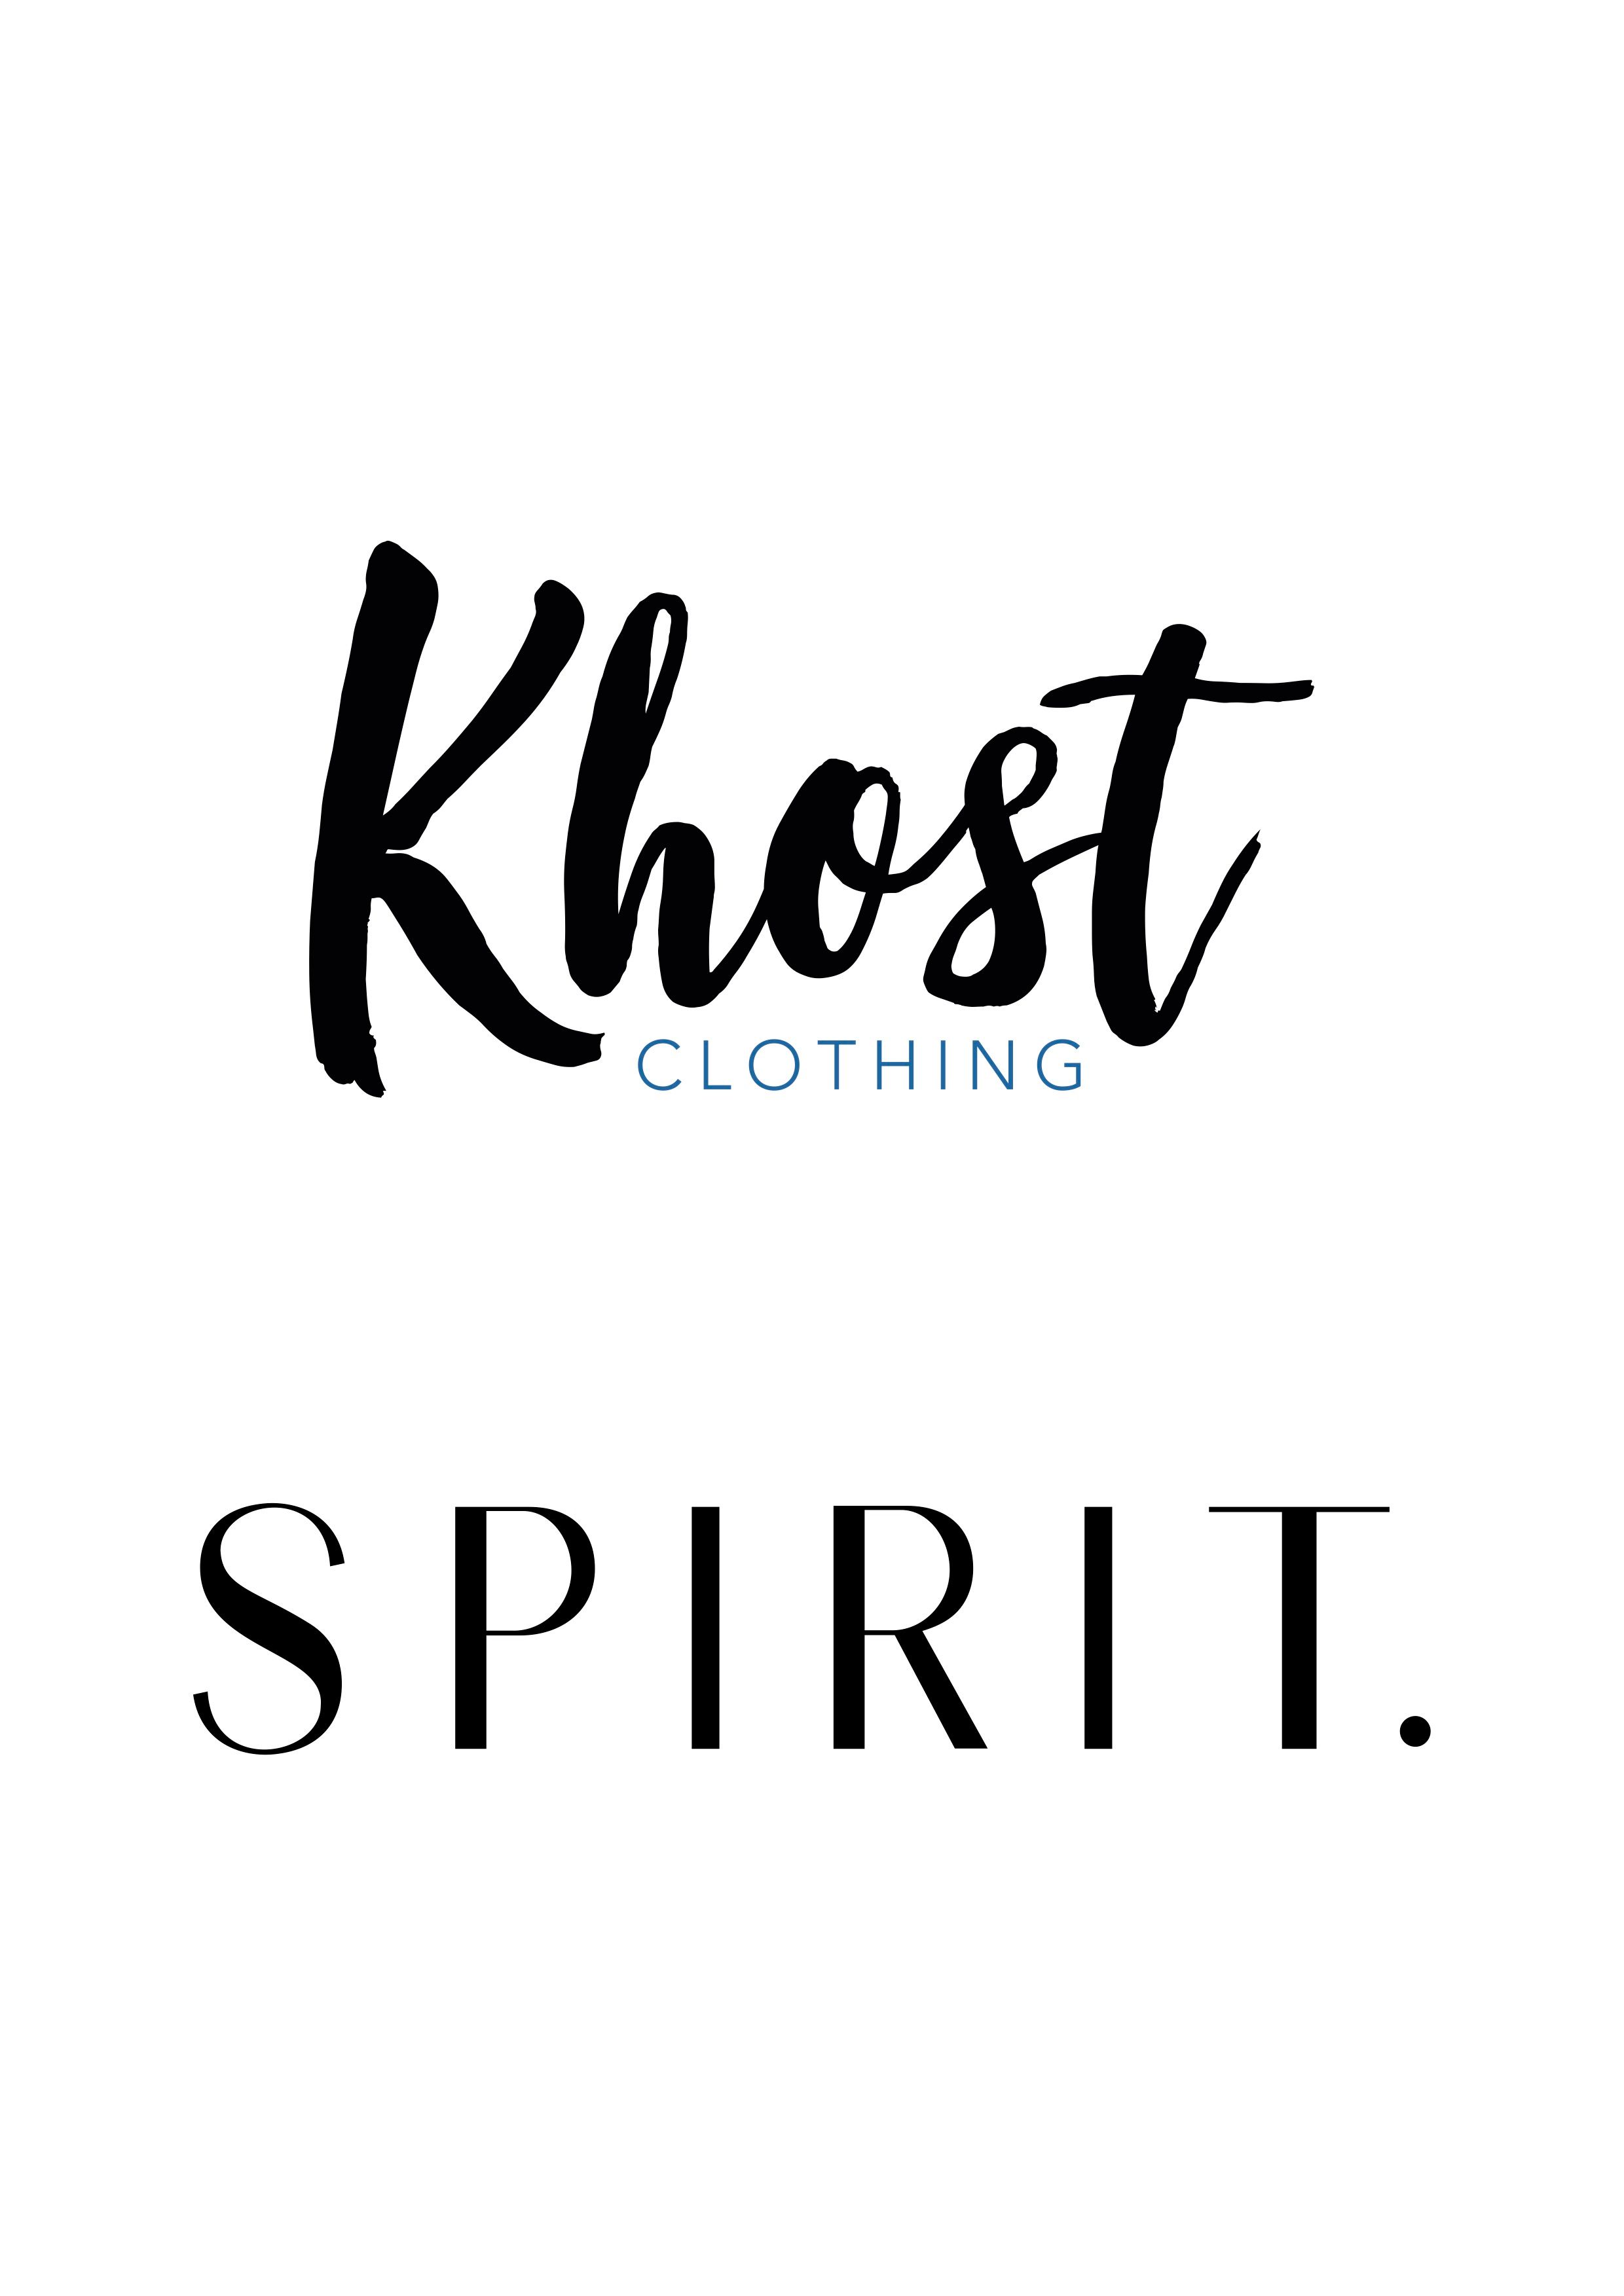 Khost and Spirit